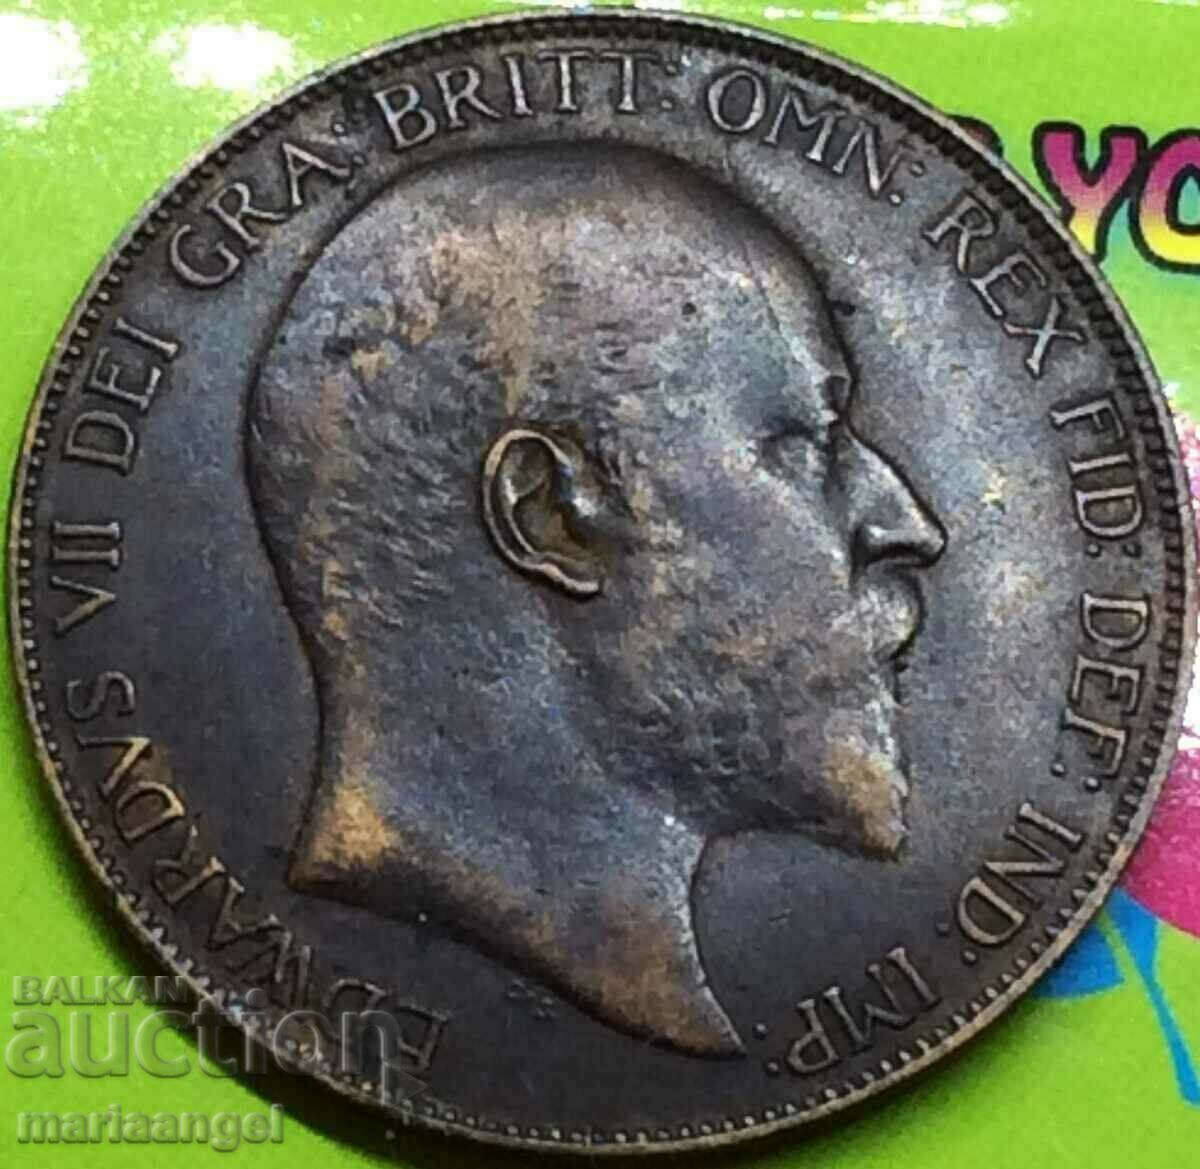 Great Britain 1 penny 1907 30mm bronze